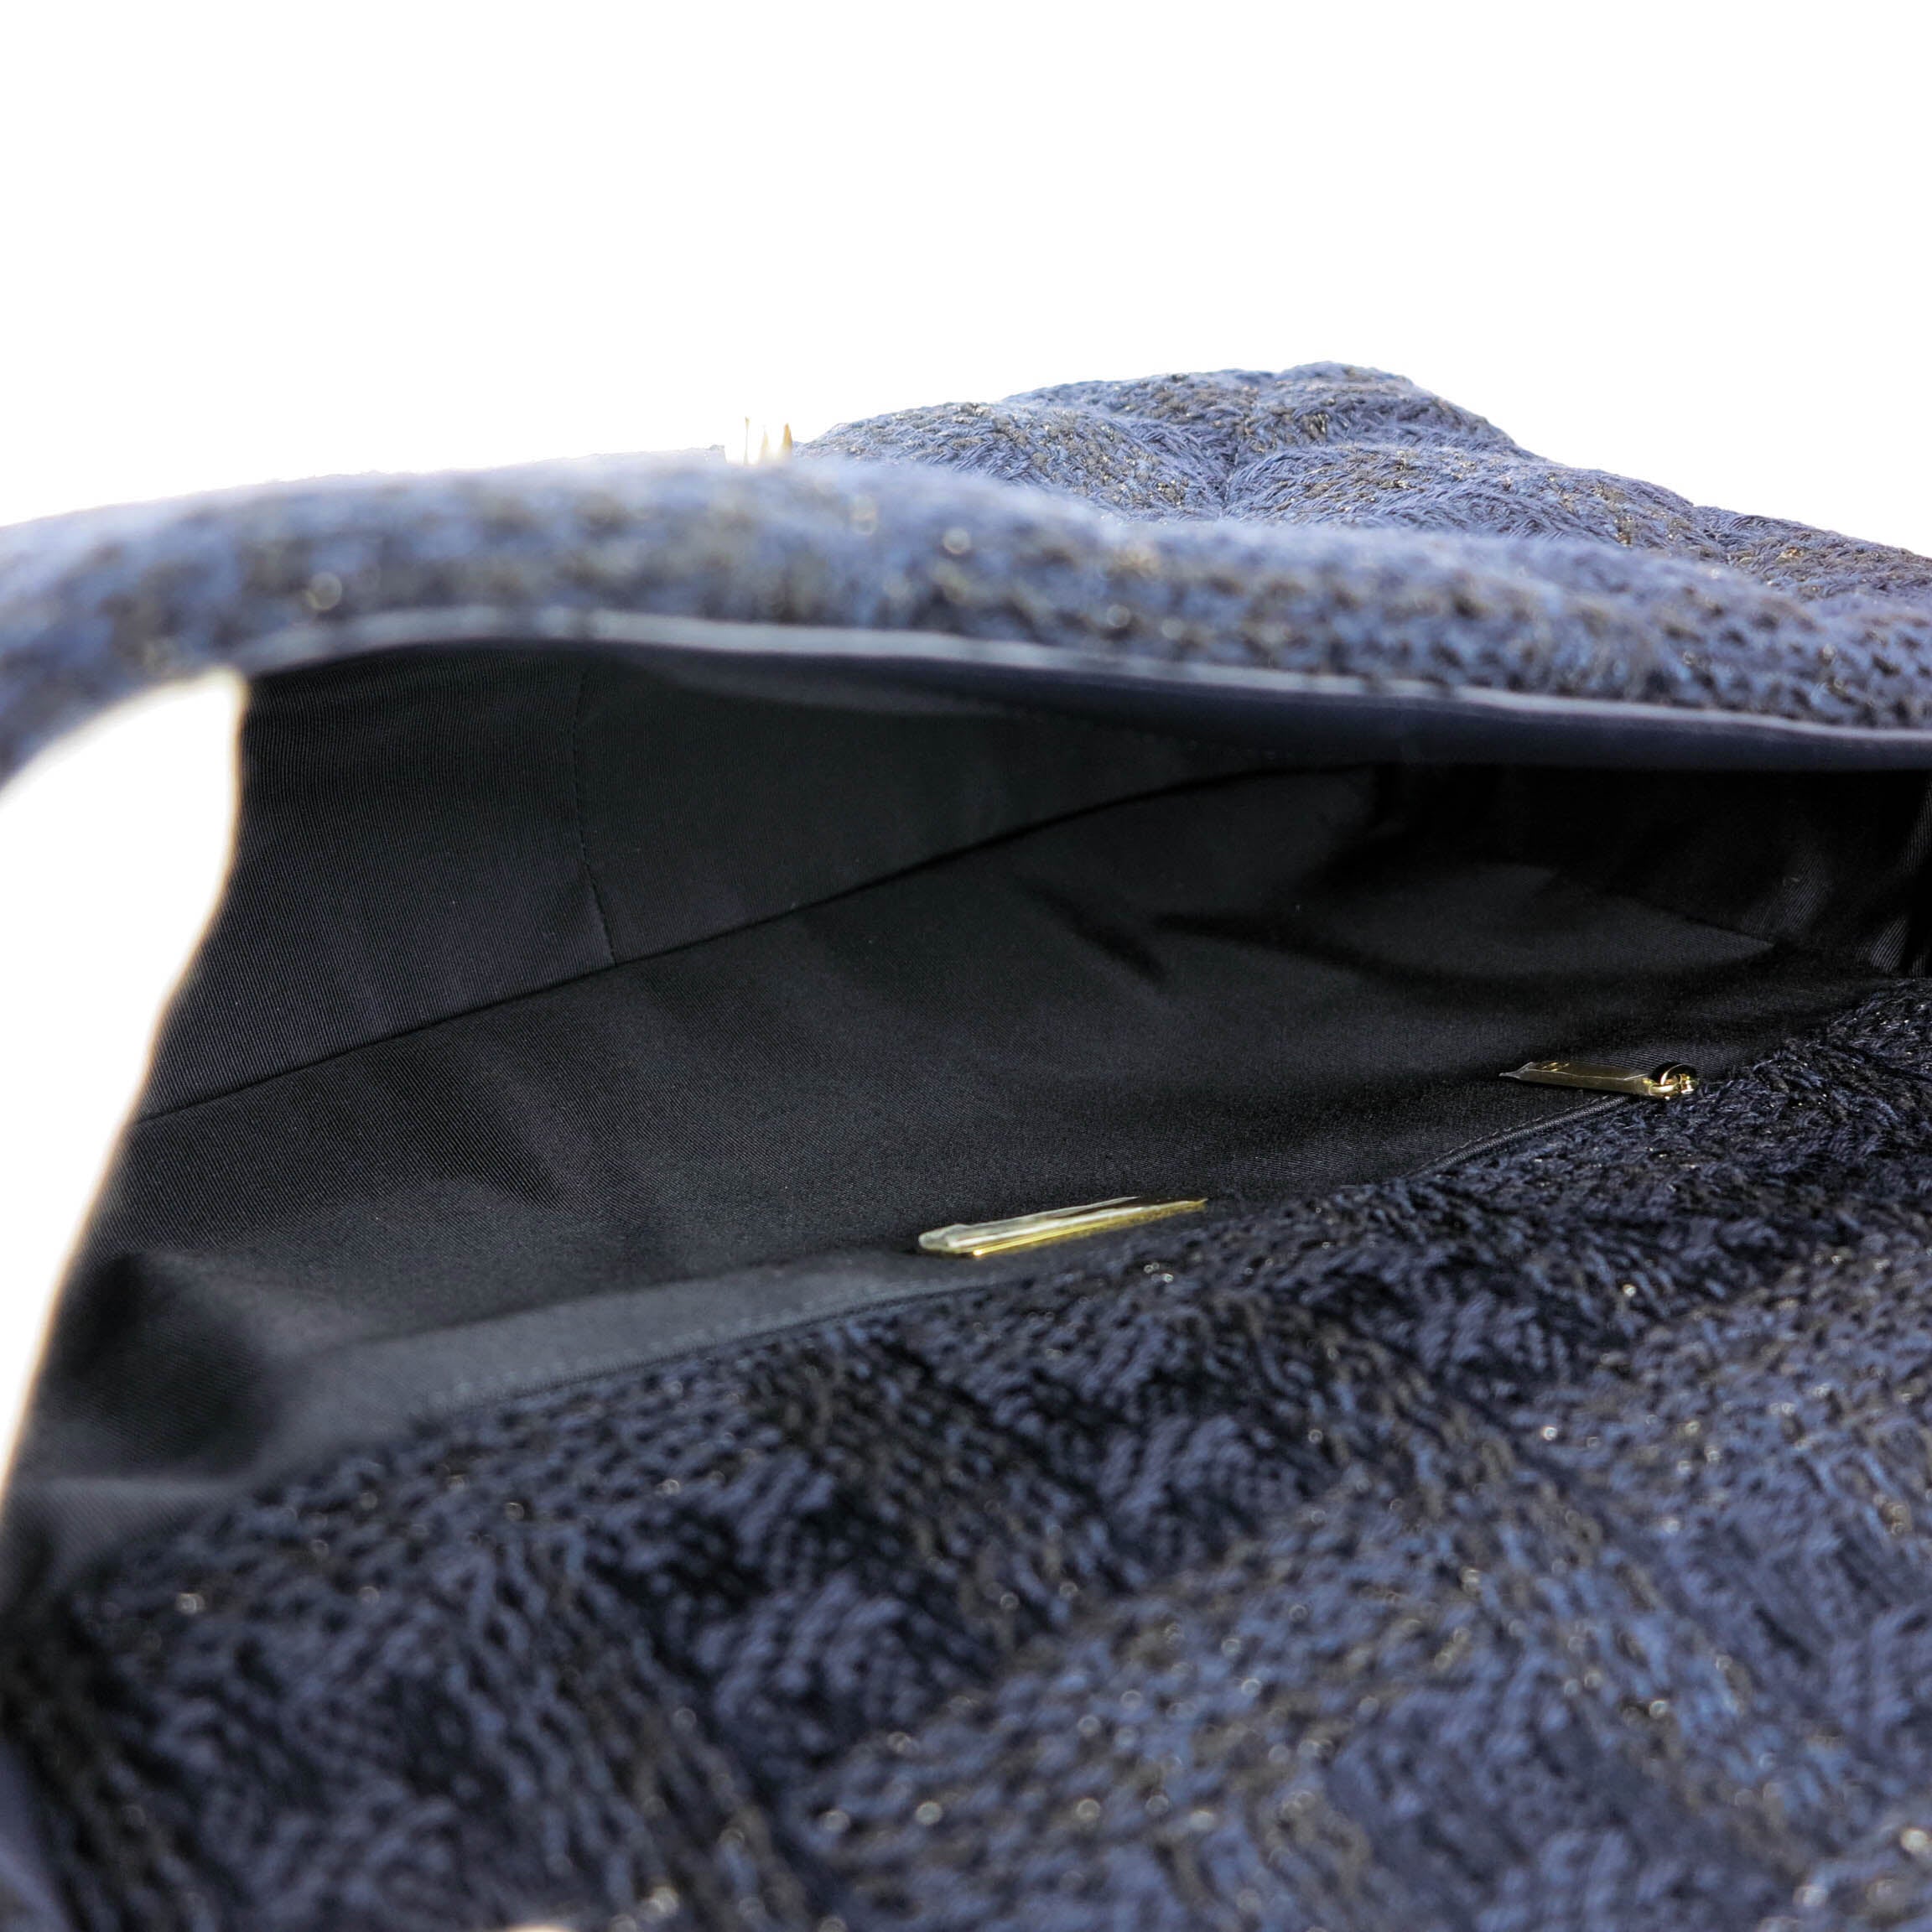 Chanel 19 Maxi Flap Bag in Navy Black Tweed